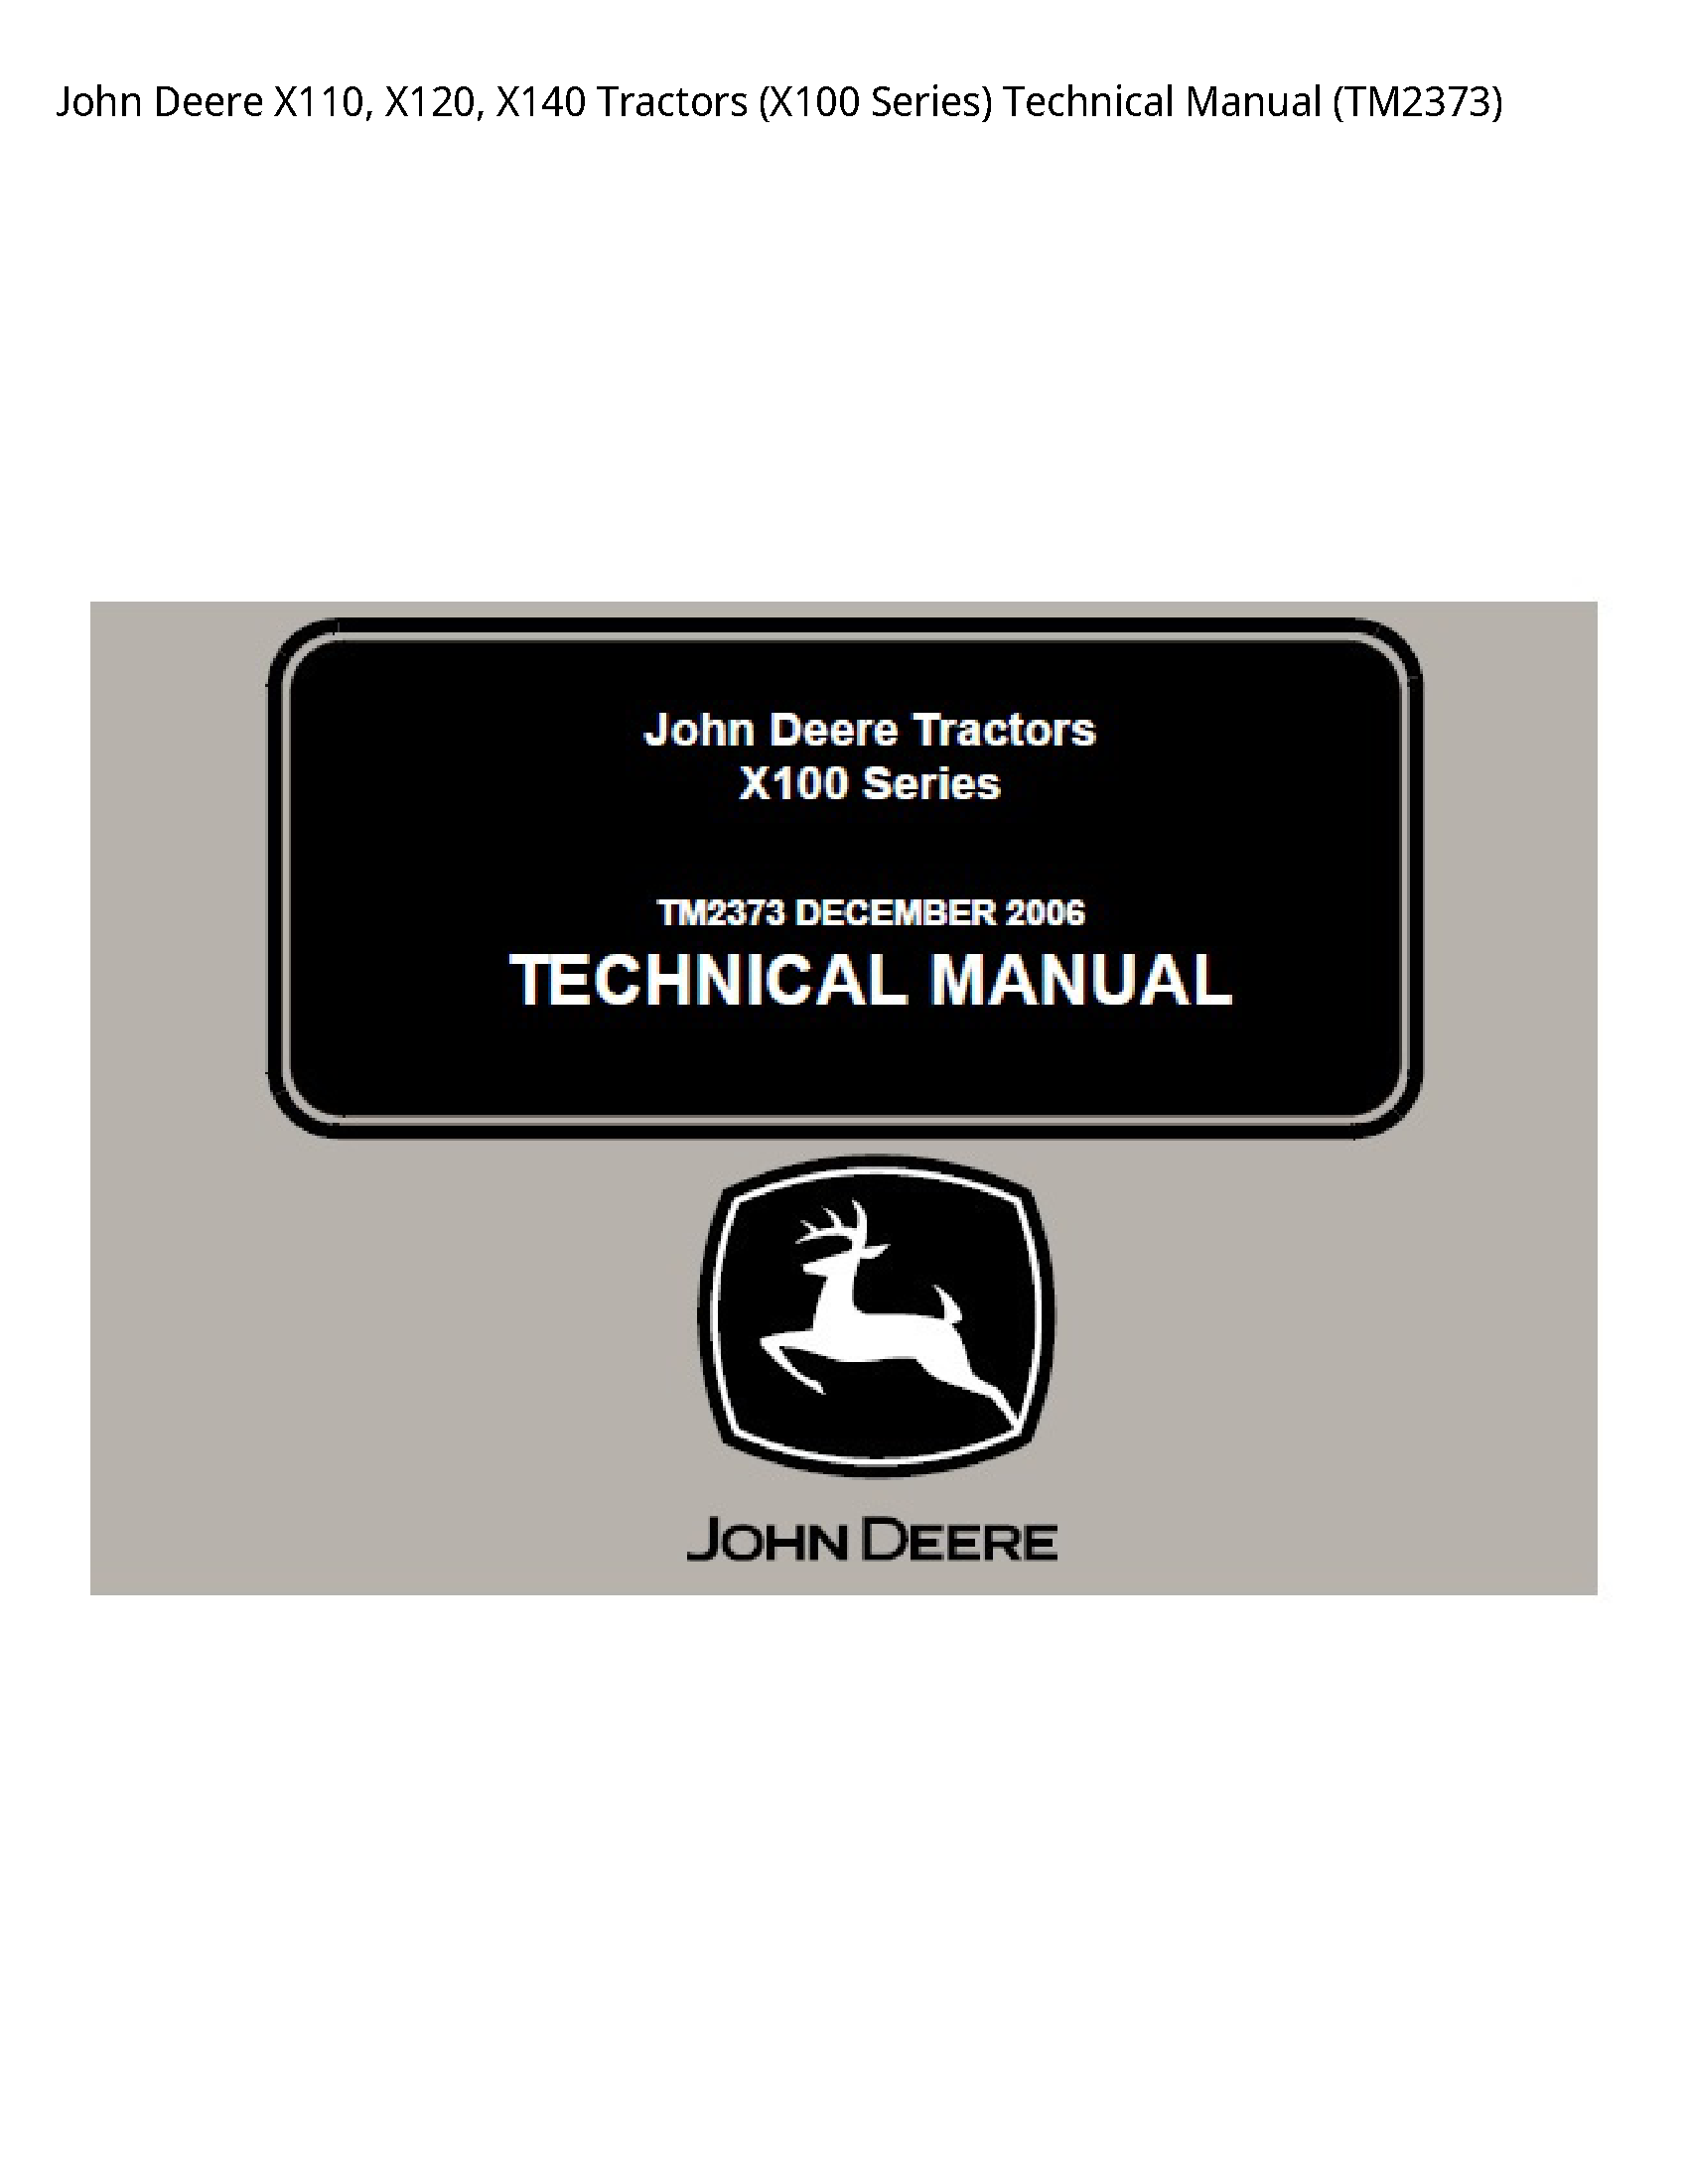 John Deere X110 Tractors Series Technical manual